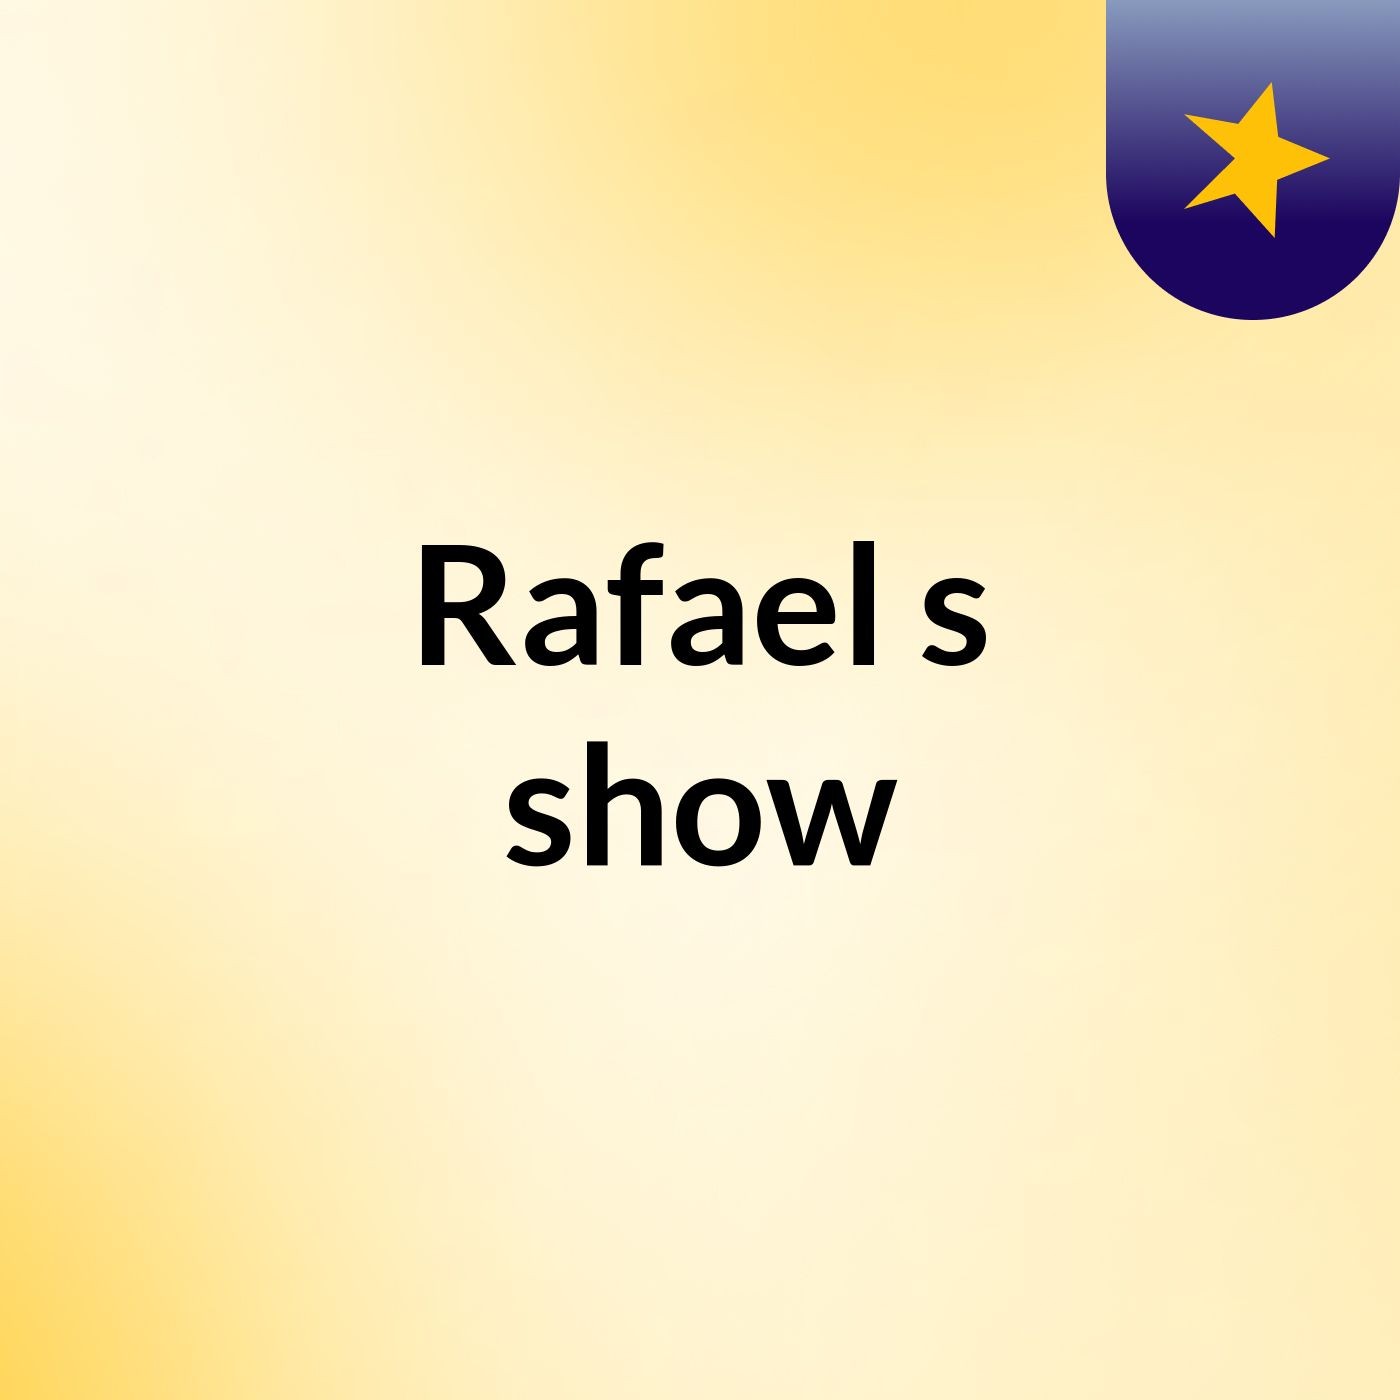 Rafael's show